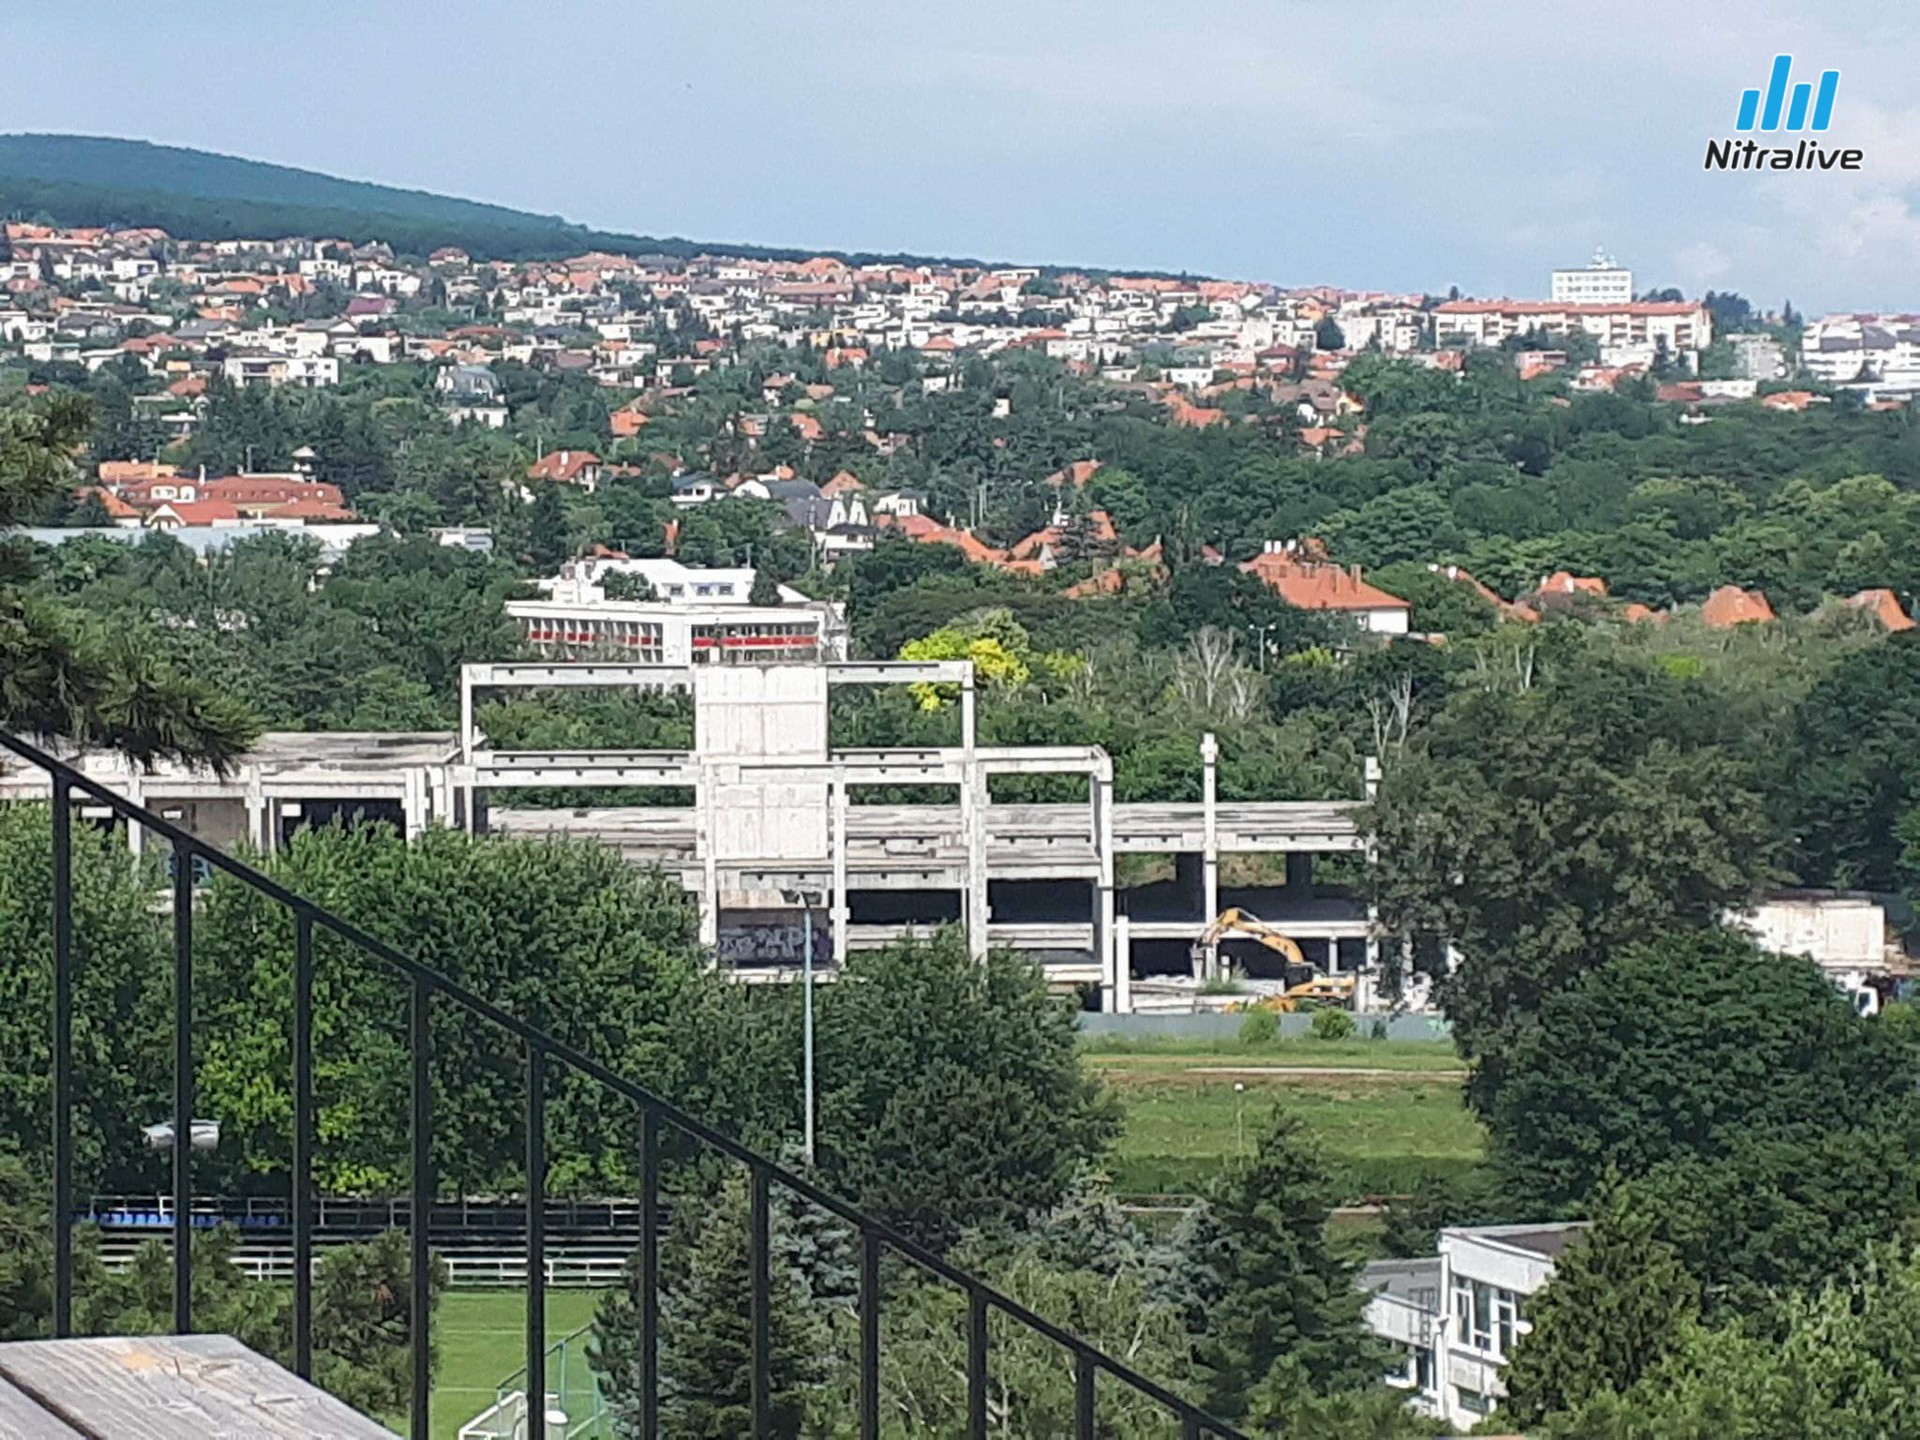 Living park Nitra, 2. jún 2018